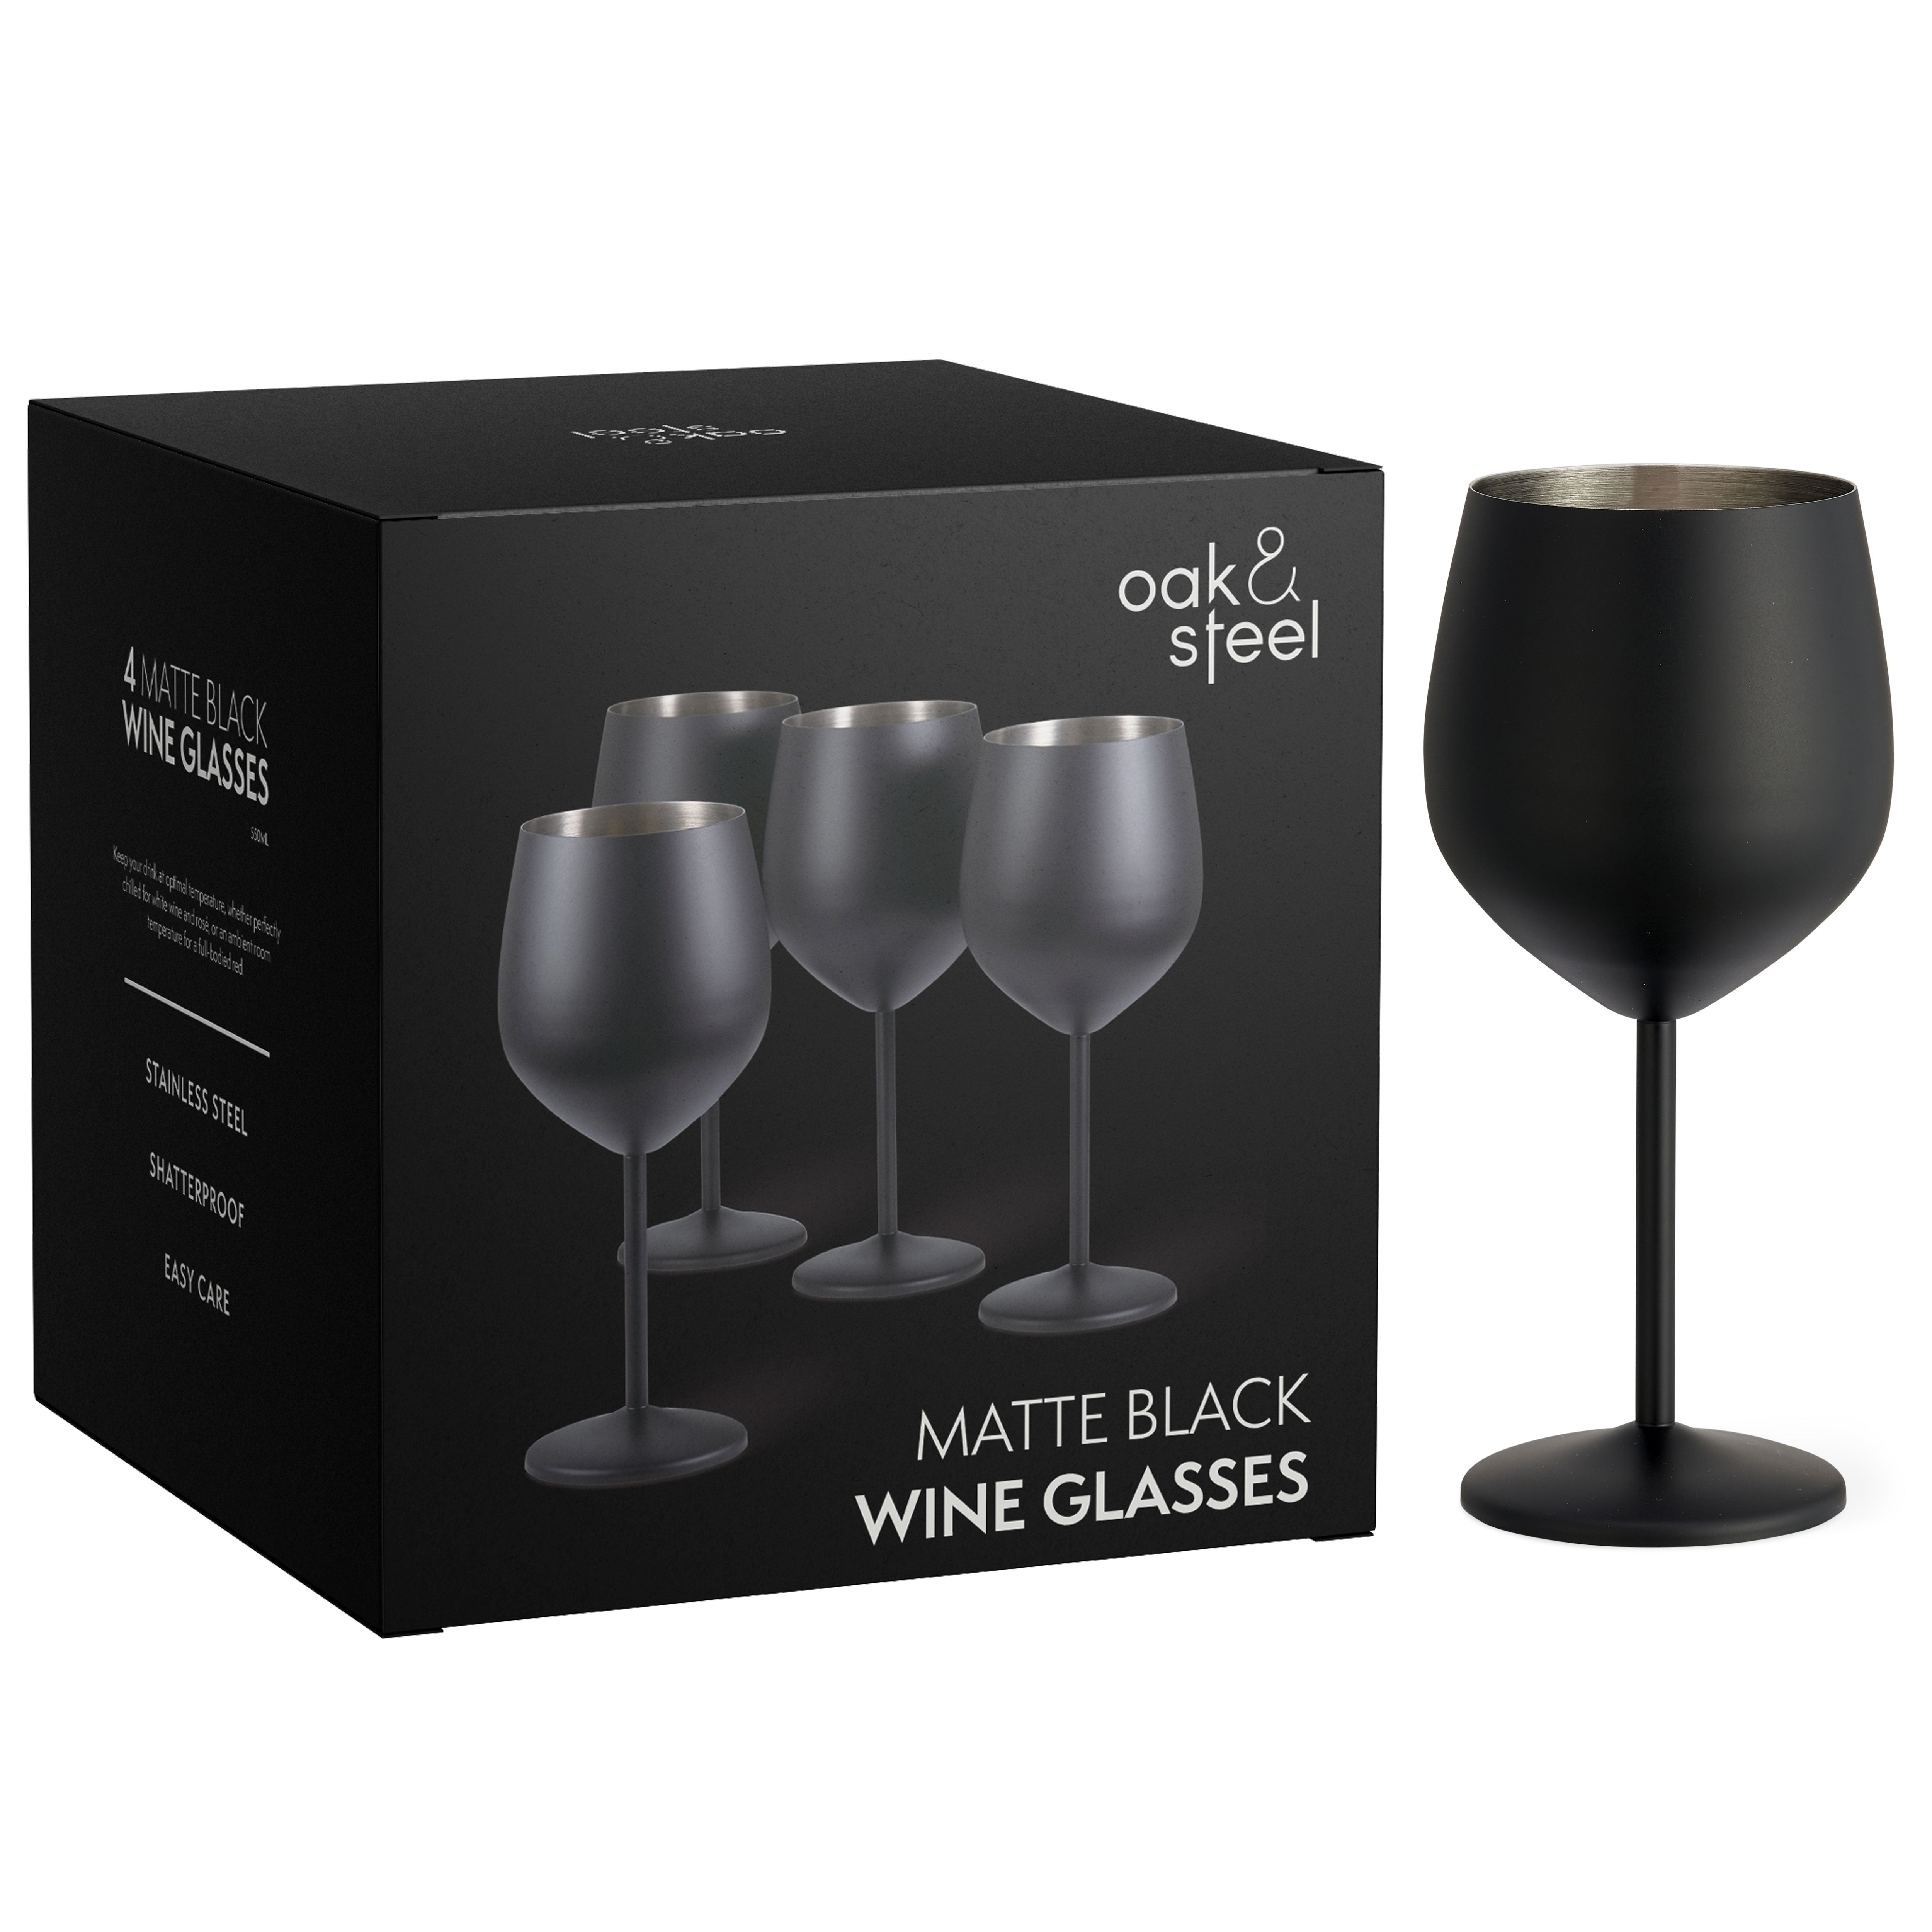 4 Matte Black Stainless Steel Wine Glasses